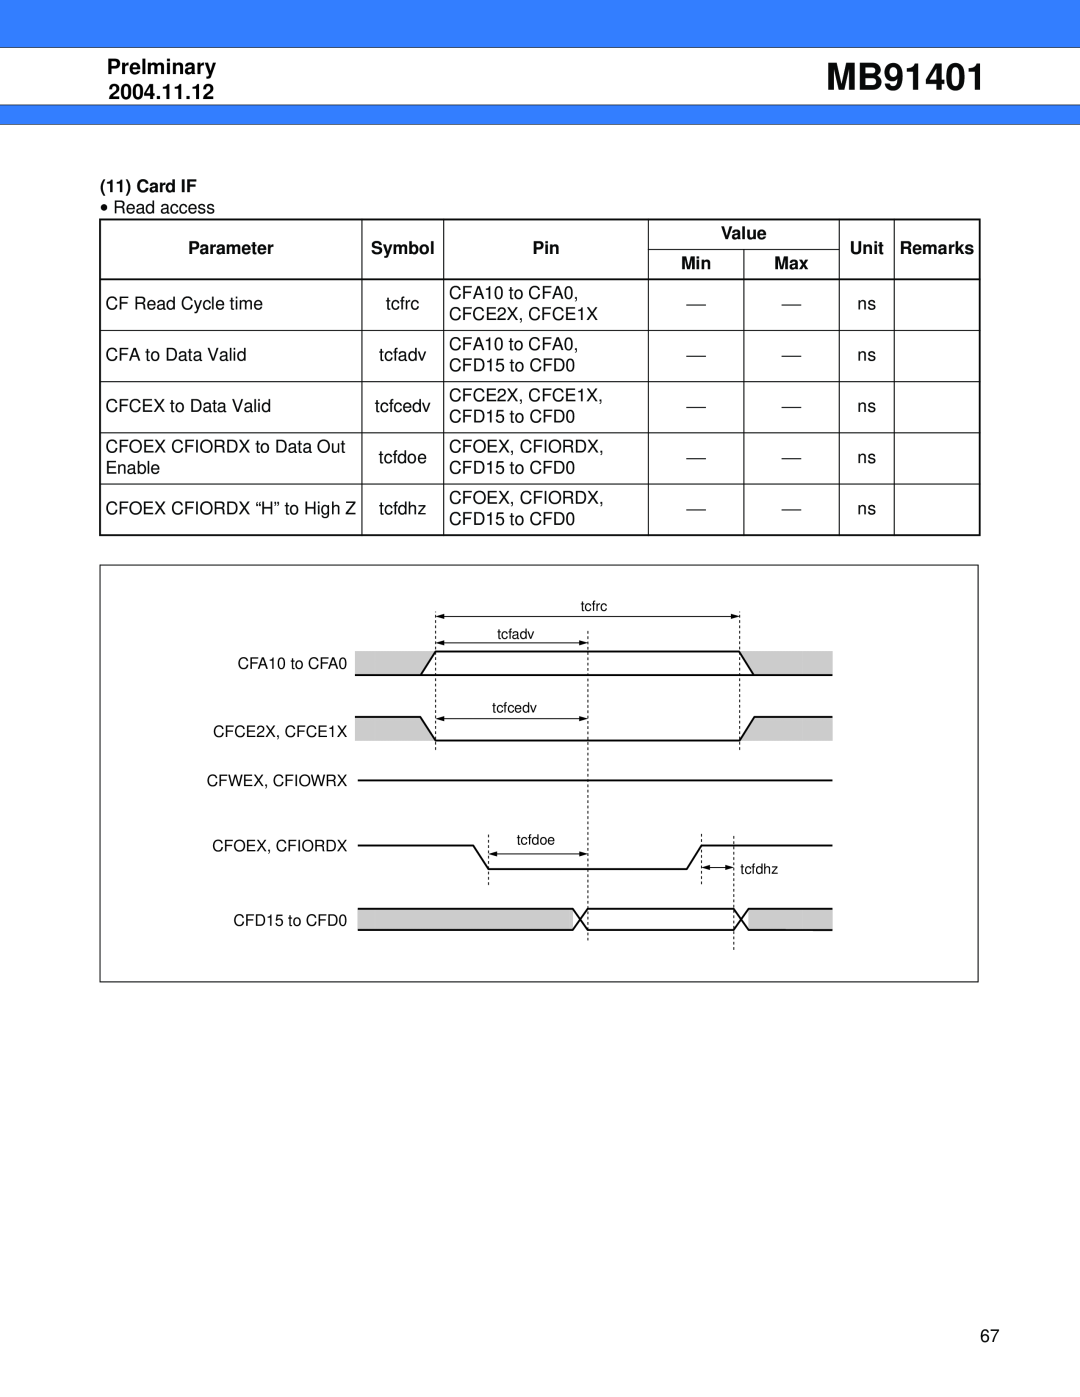 Fujitsu MB91401 manual Card IF, Prelminary, 2004.11.12, Parameter, Symbol, Value, Unit, Remarks 